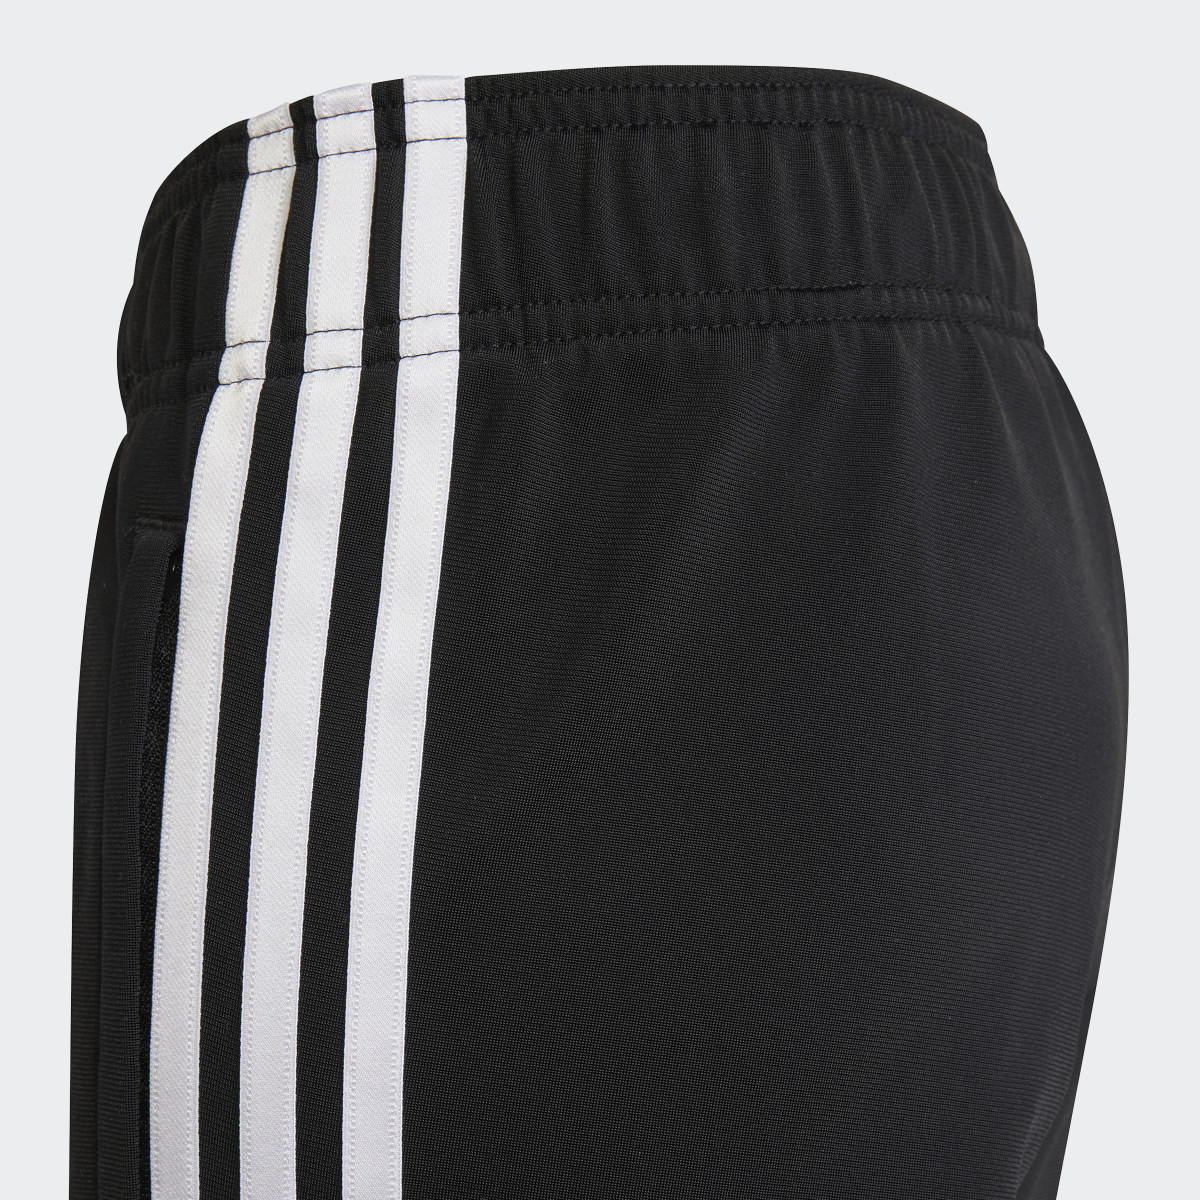 Adidas 3-Stripes Flared Pants. 5